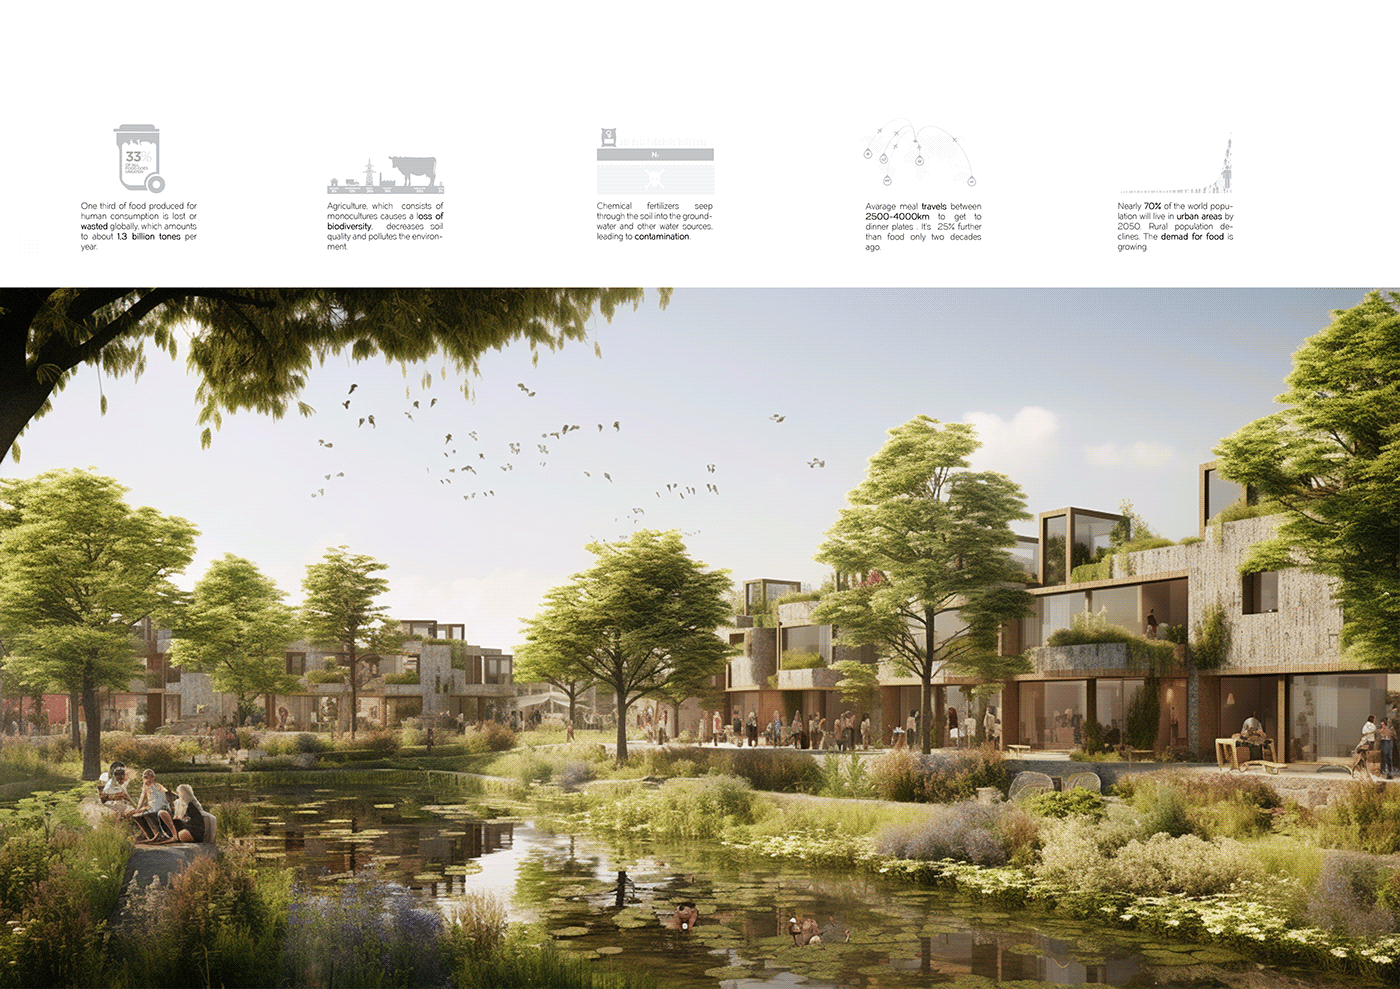 Urban Design architecture visualization Analisis Urbano eco ecodesign permaculture ecovillage Sustainability communal living